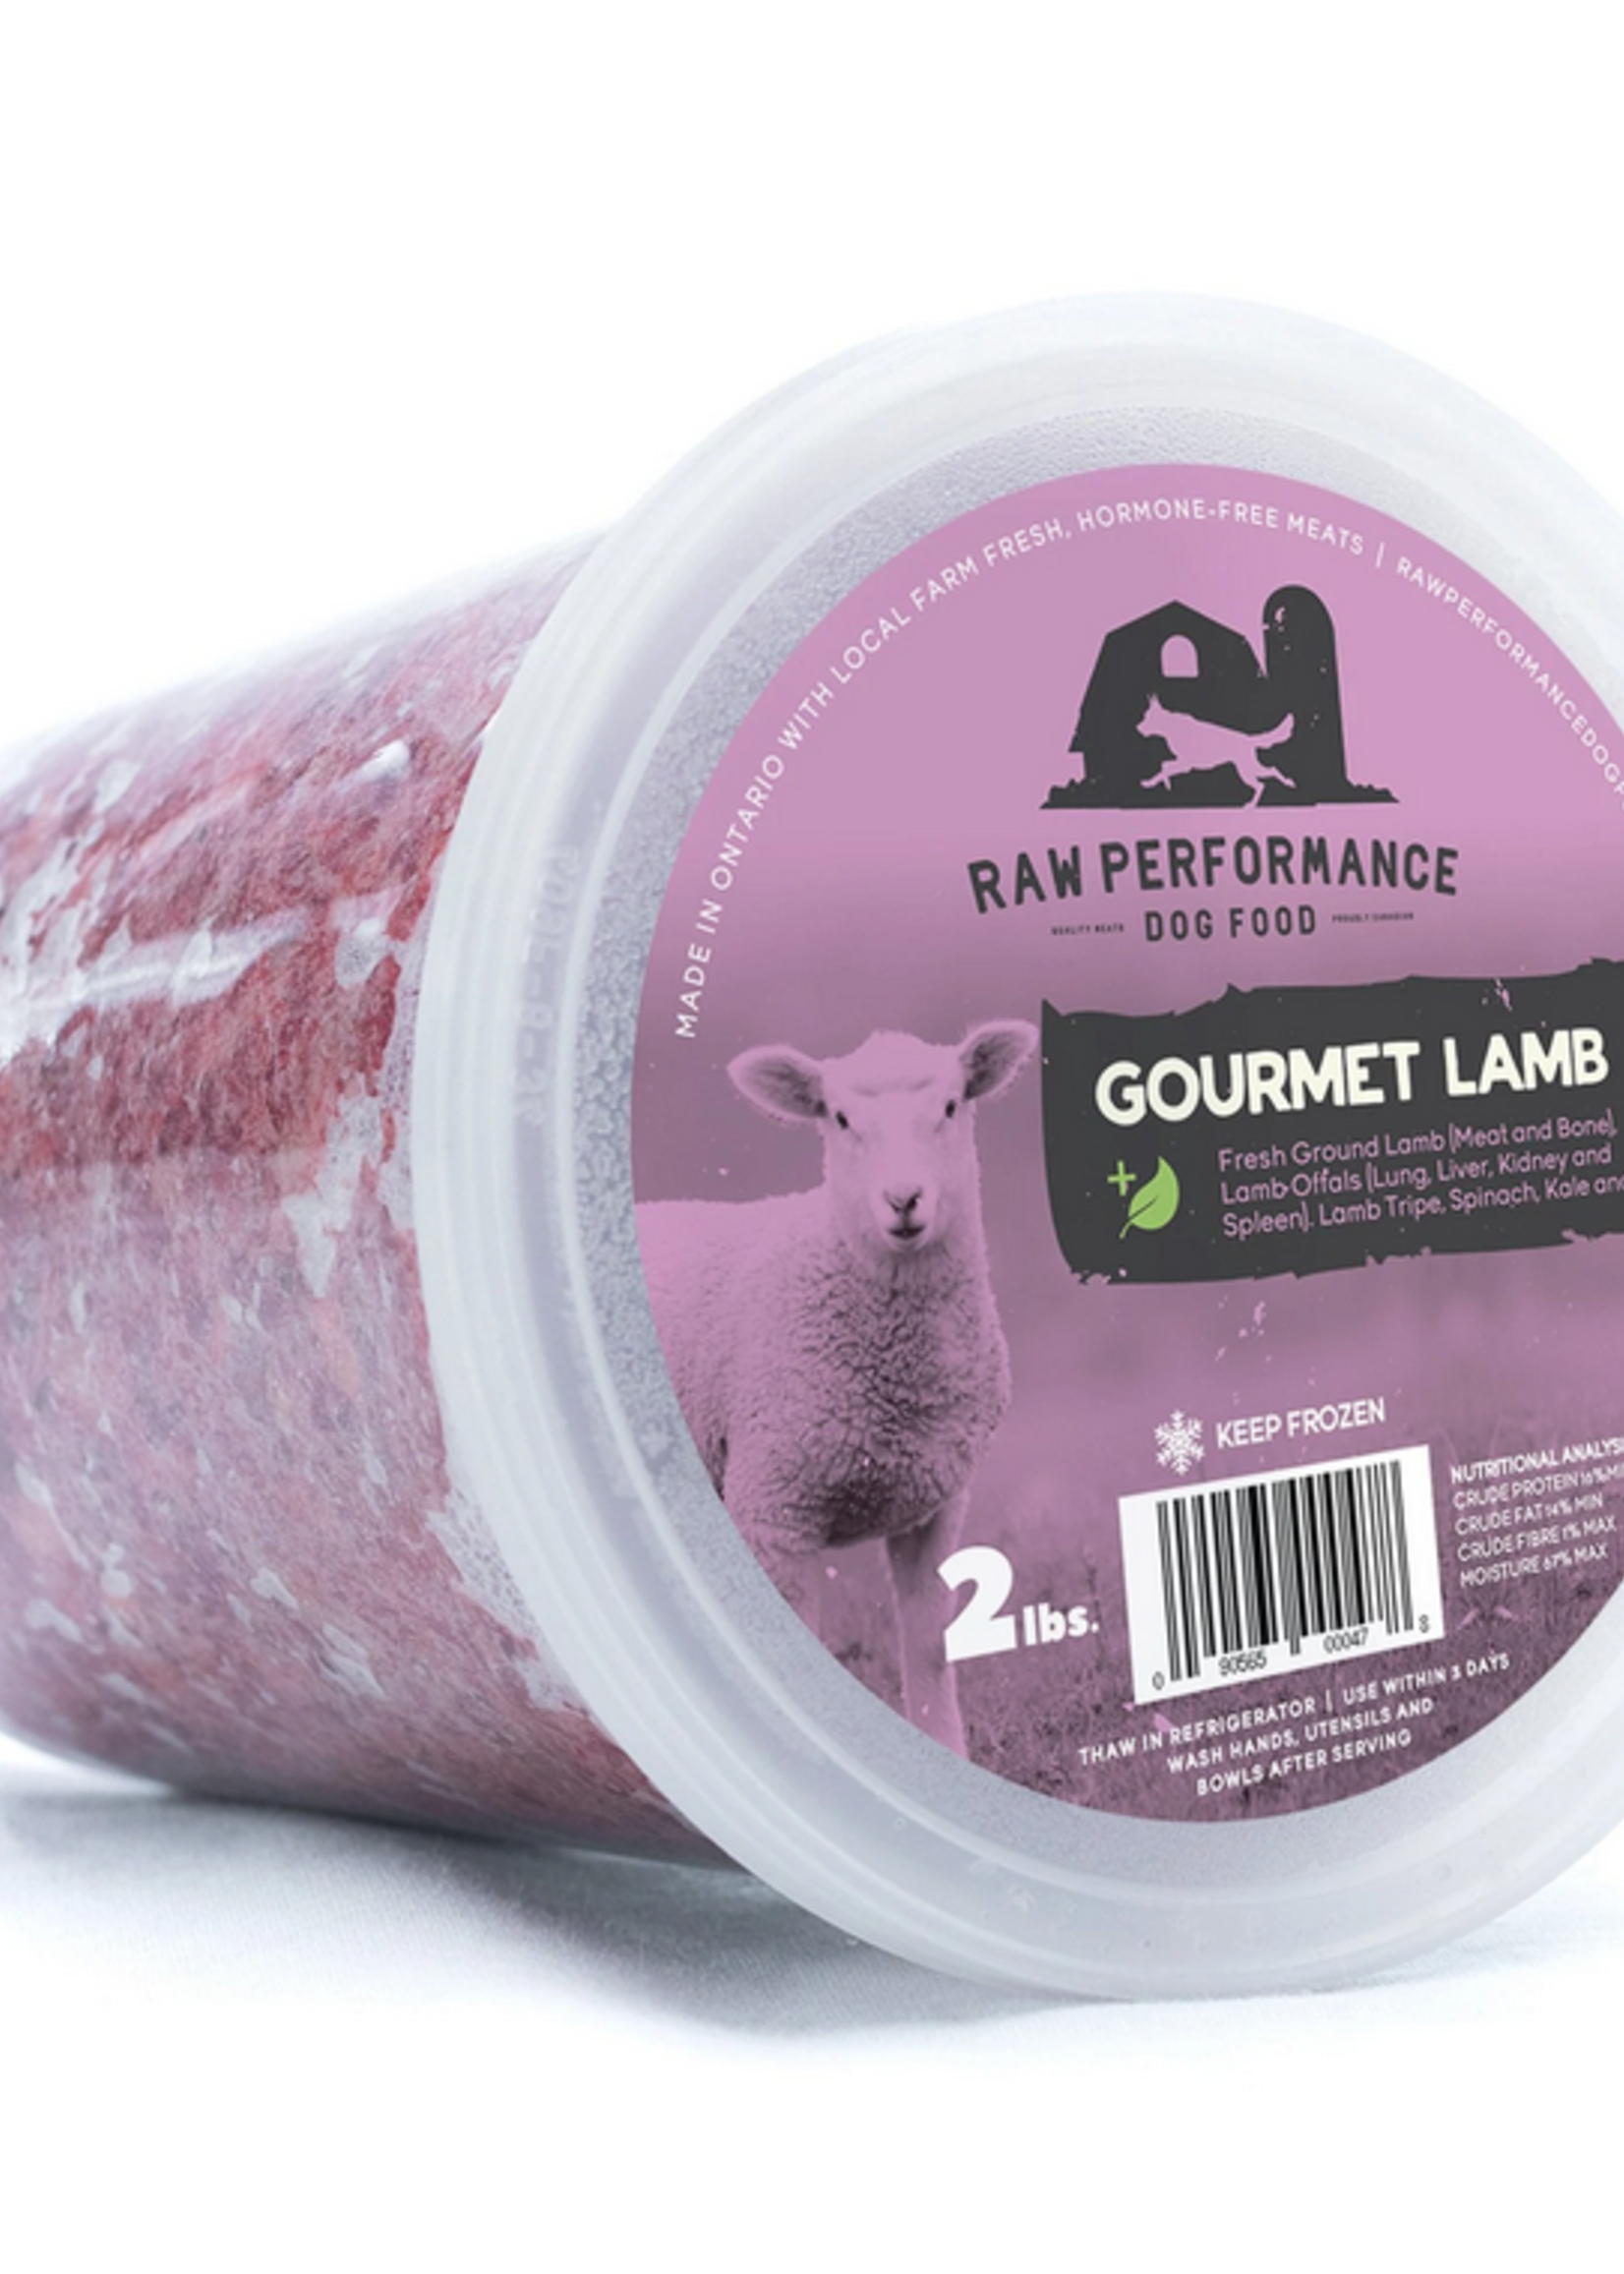 Raw Performance Raw Performance Gourmet Lamb 2lb